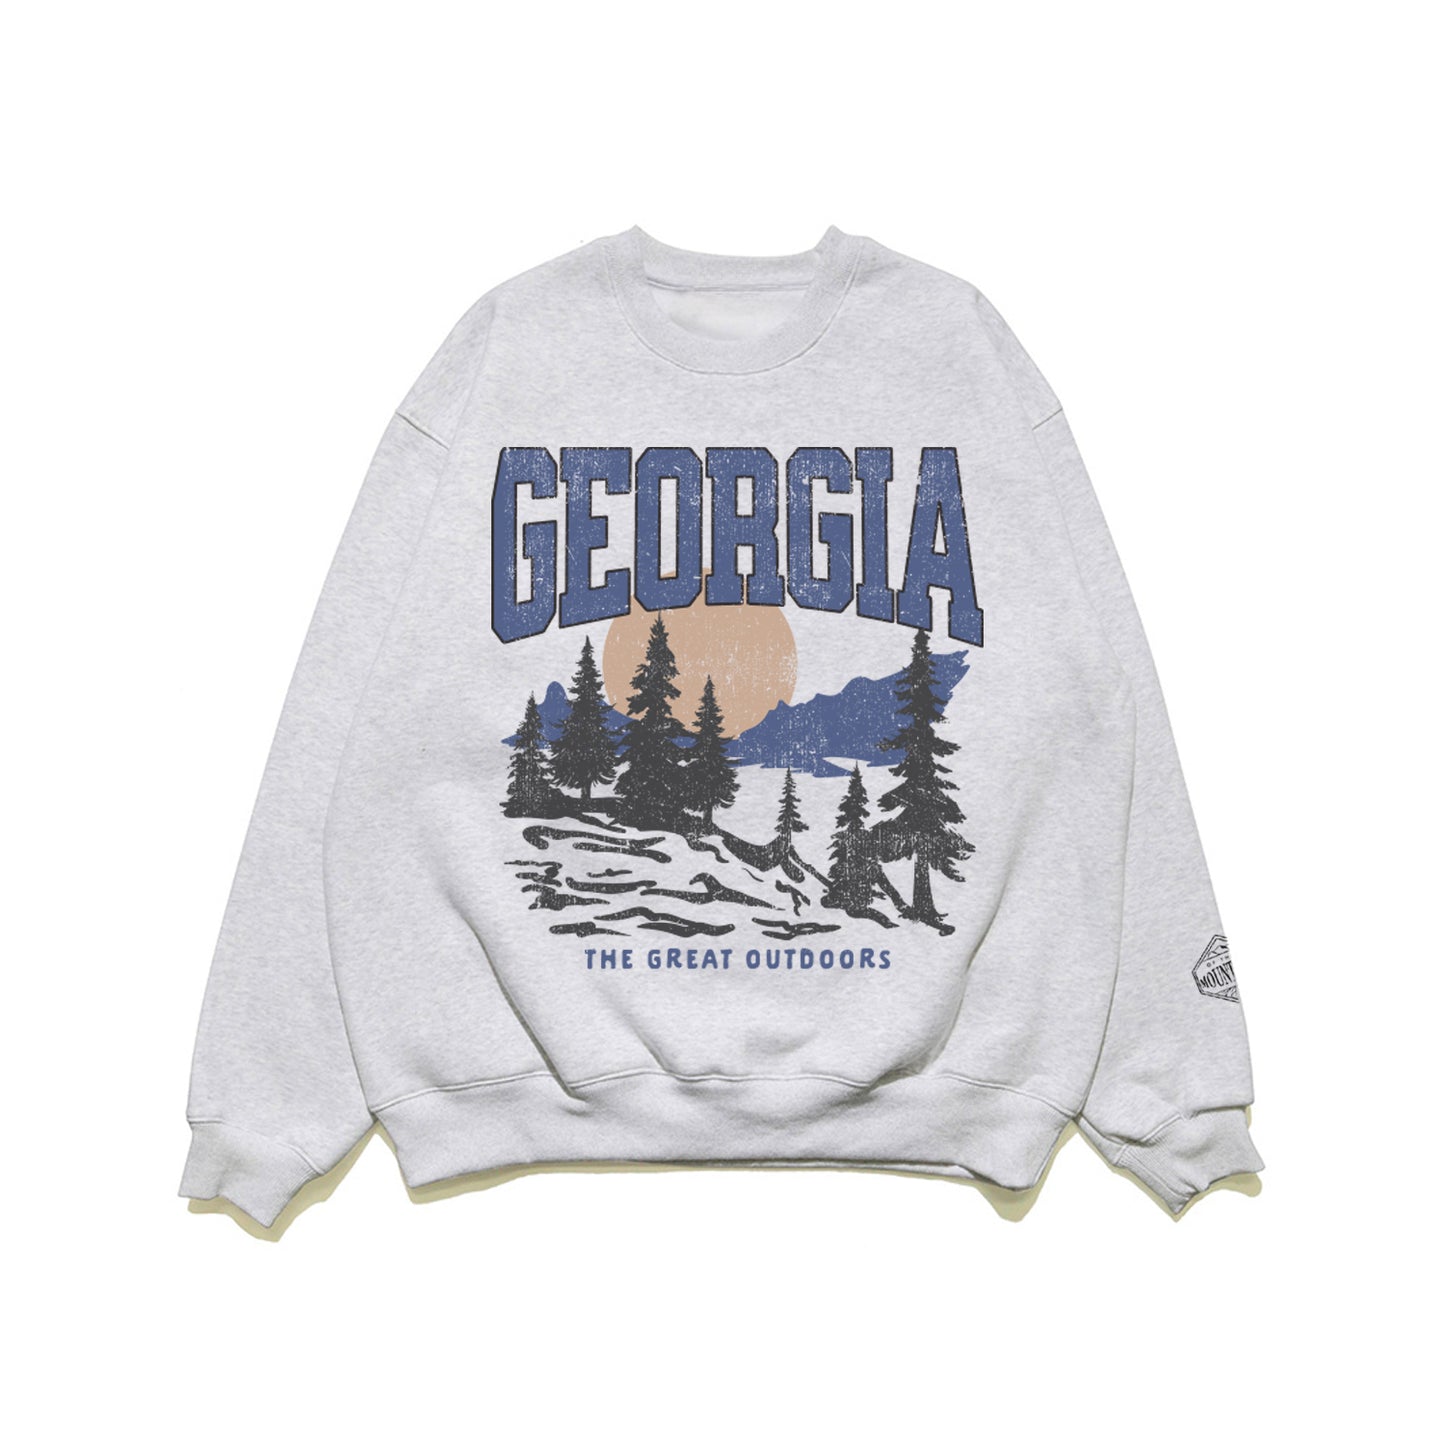 Blue Ridge Varsity Crewneck Sweatshirt